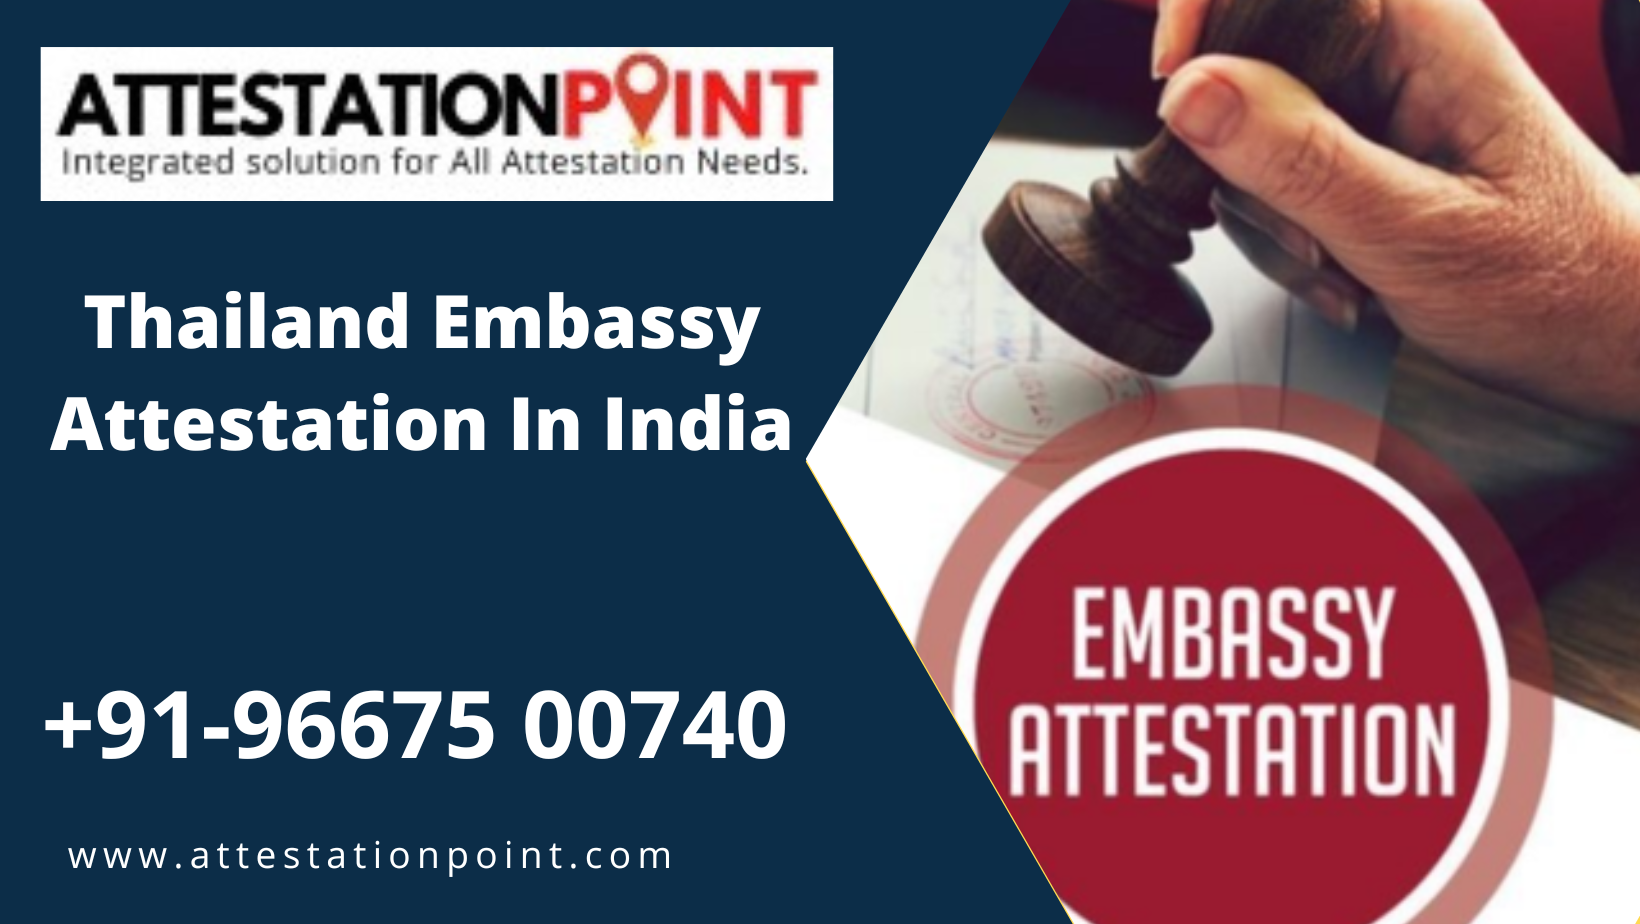 Tunisia Embassy Attestation In India